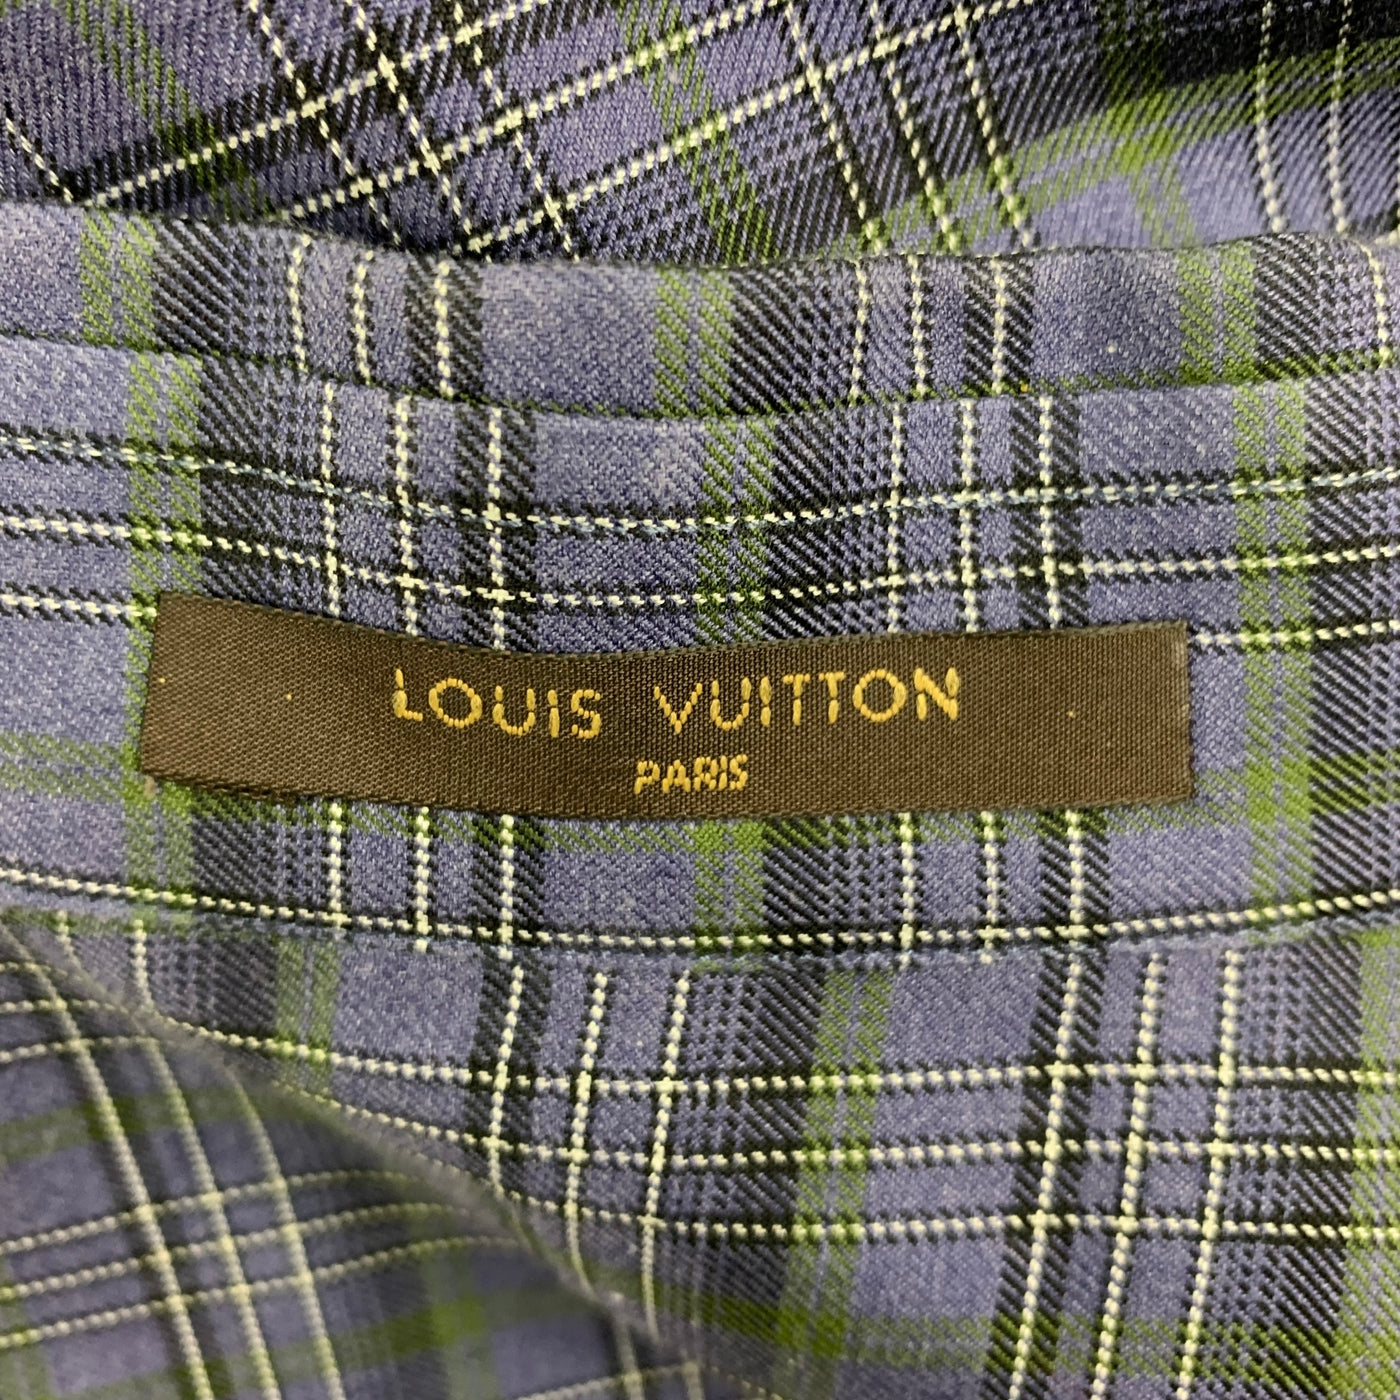 LOUIS VUITTON Size S Gray & Black Damier Cotton Button Up Long Sleeve Shirt